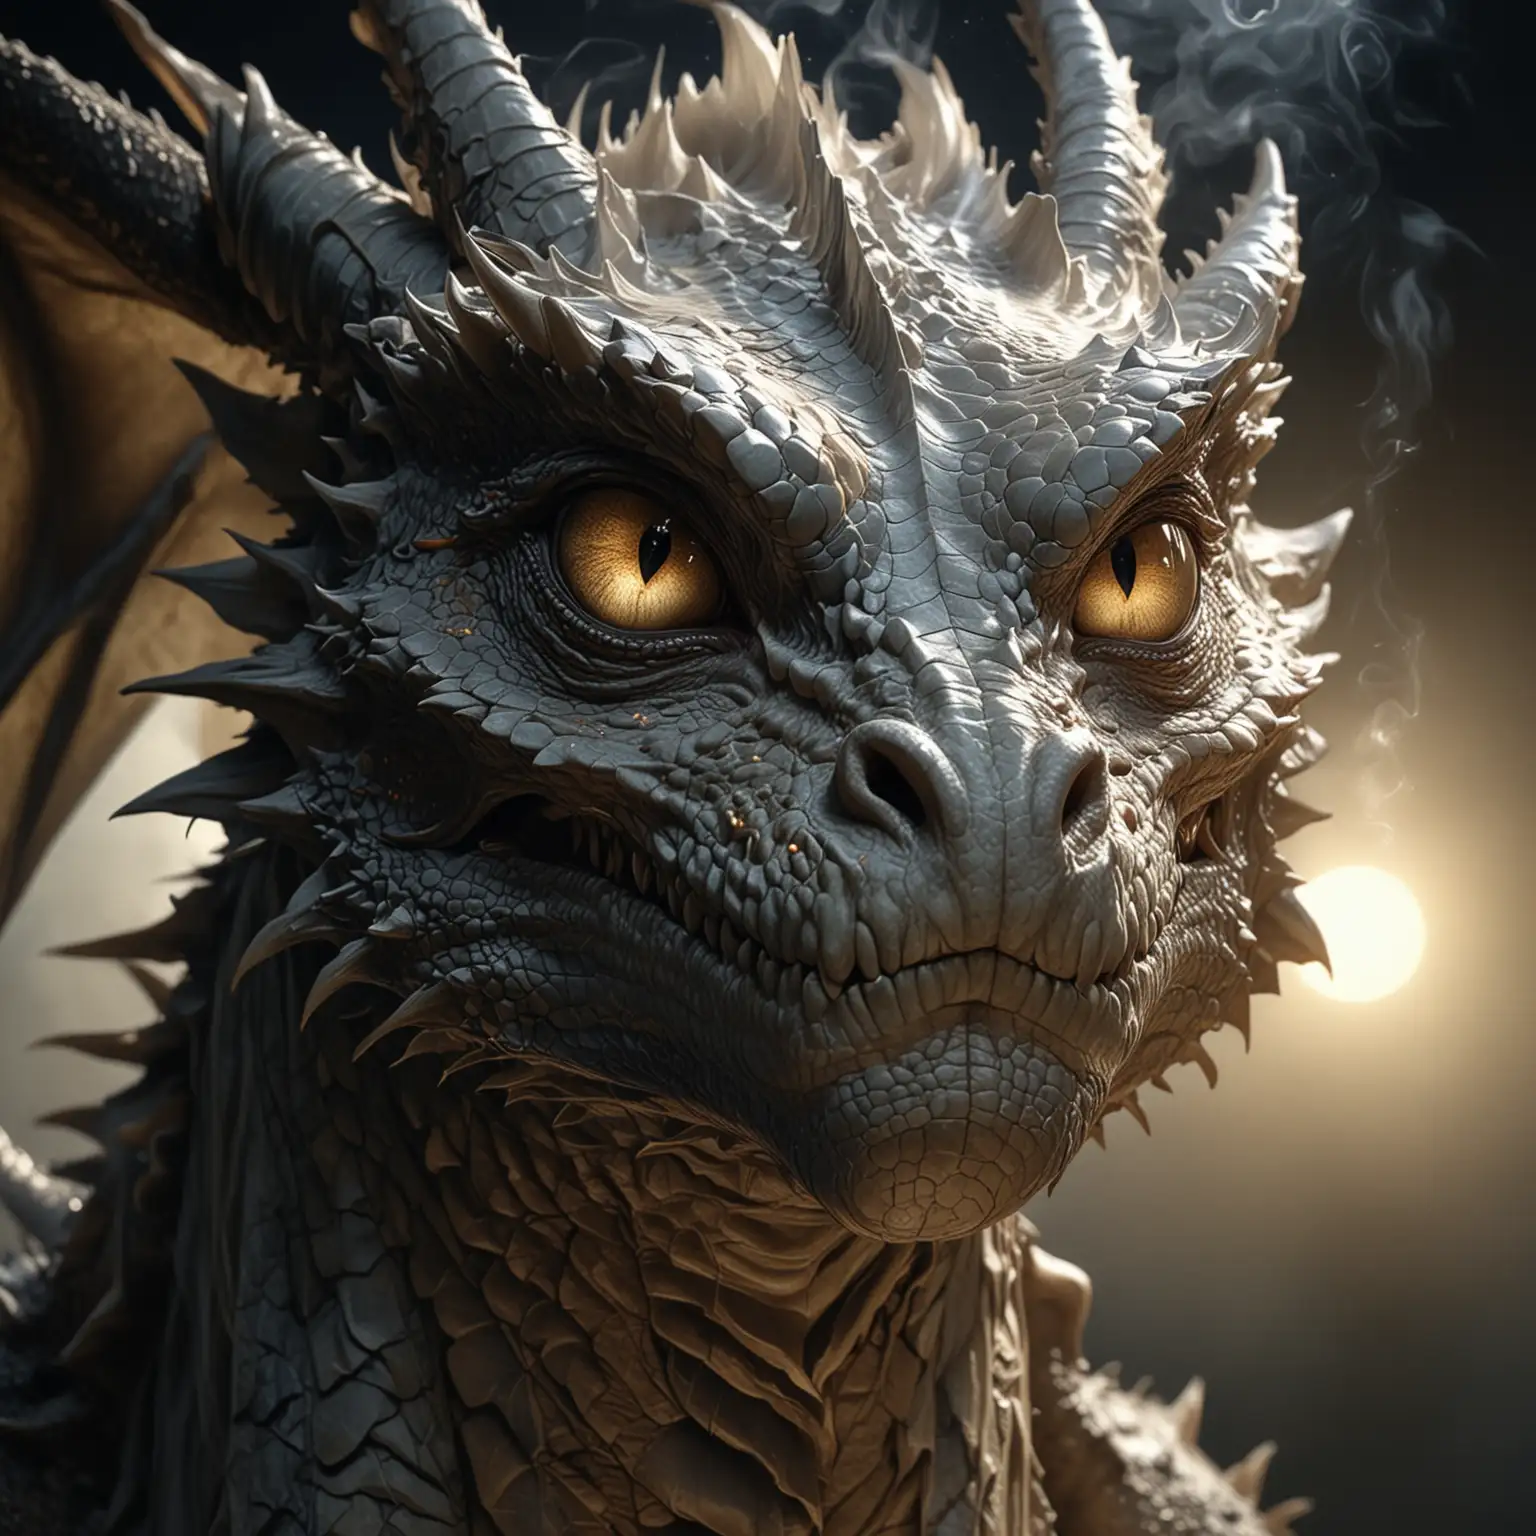 Hyperrealistic Order Dragon Portrait Under Moonlight